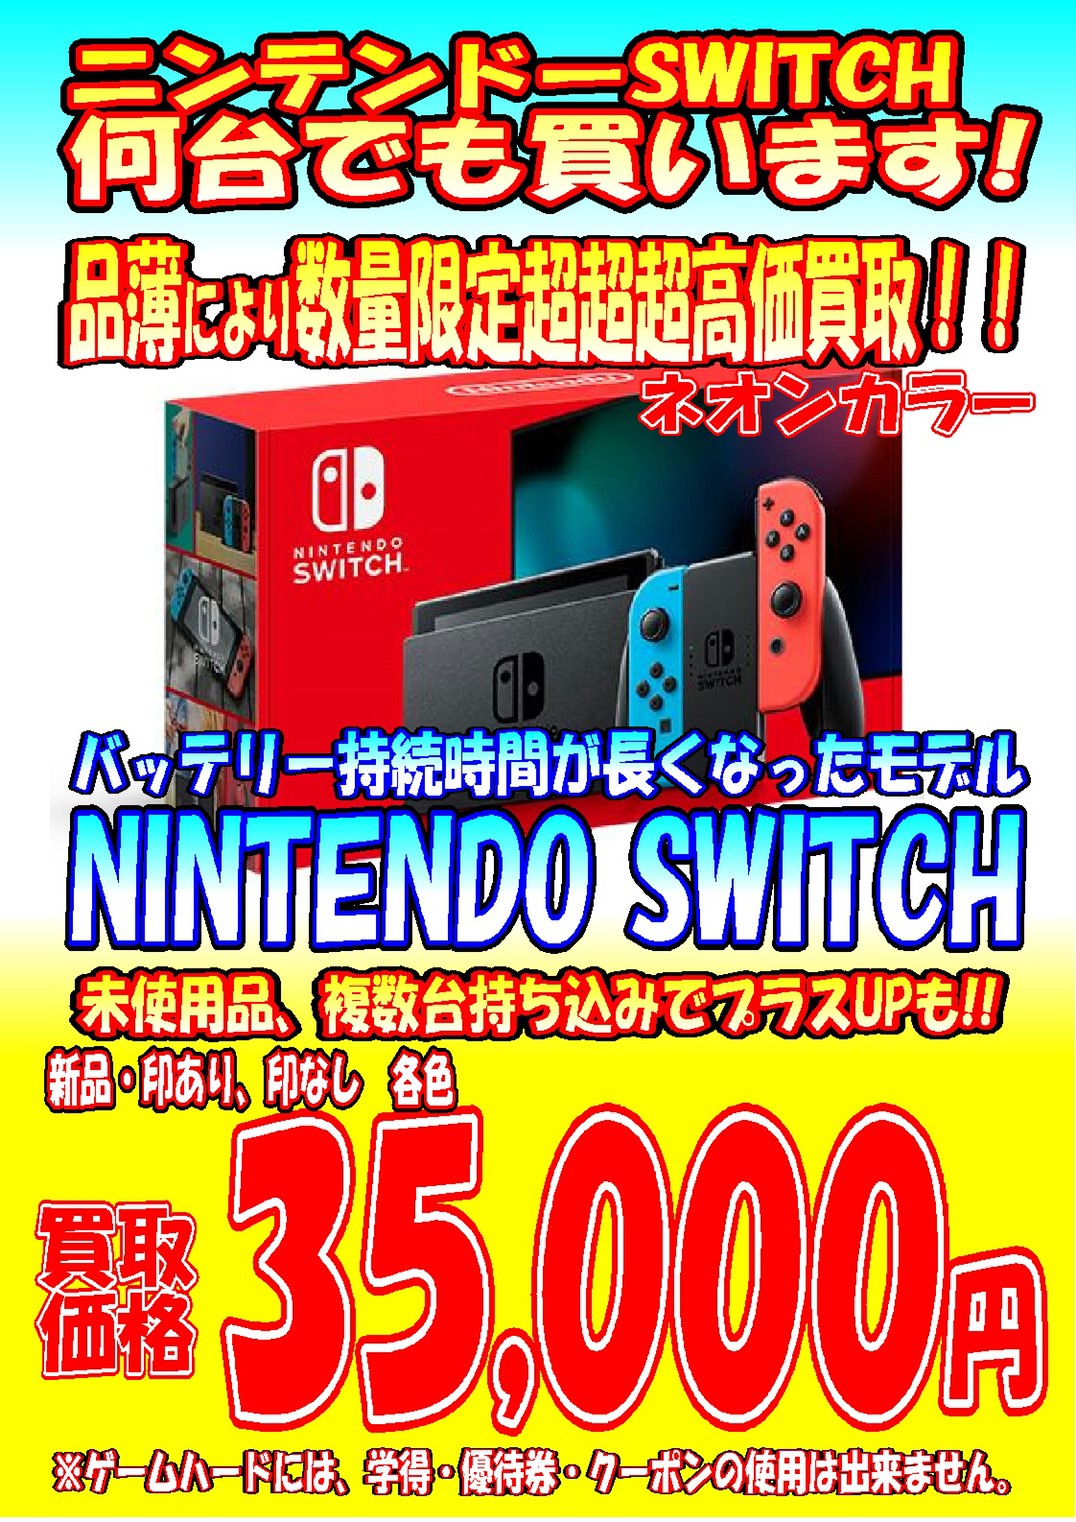 Nintendo switch クーポン無し(5台まで数量対応可)